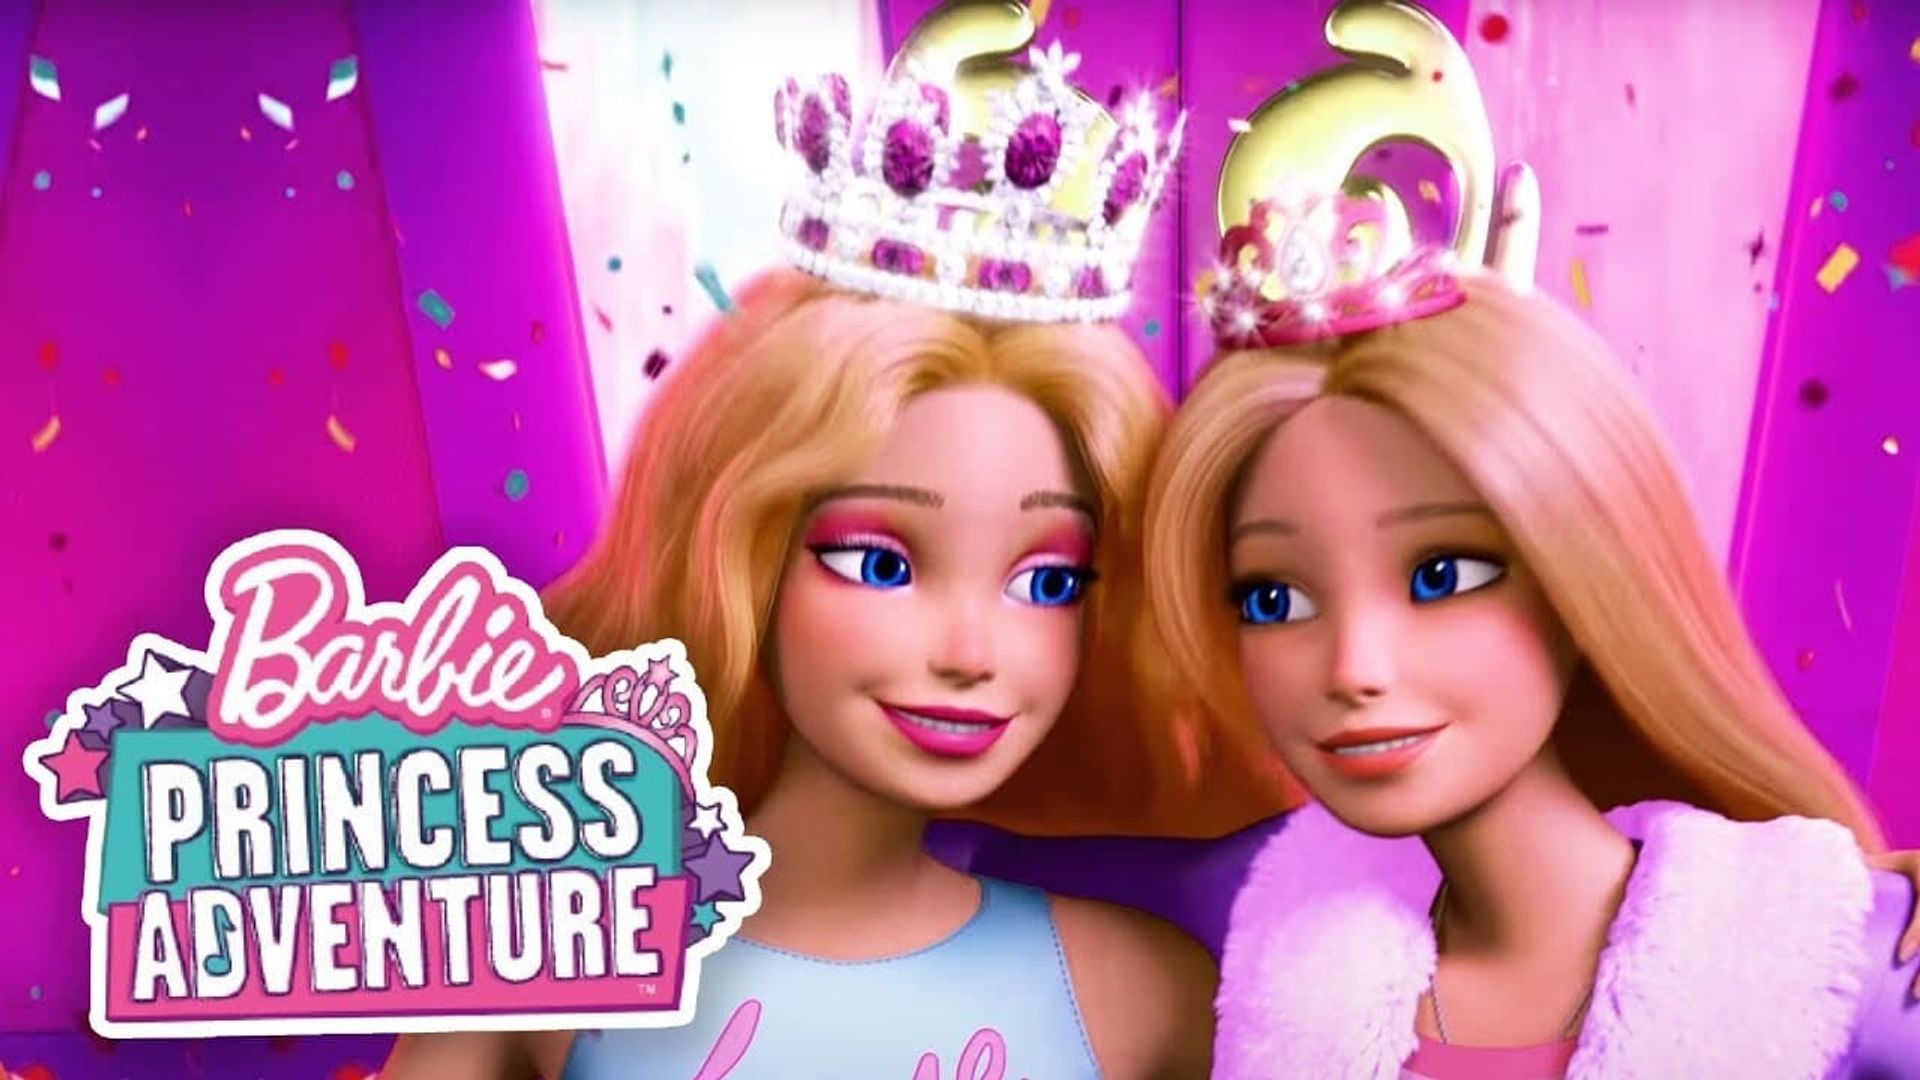 Barbie: Princess Adventure (2020) on Netflix or Streaming Online